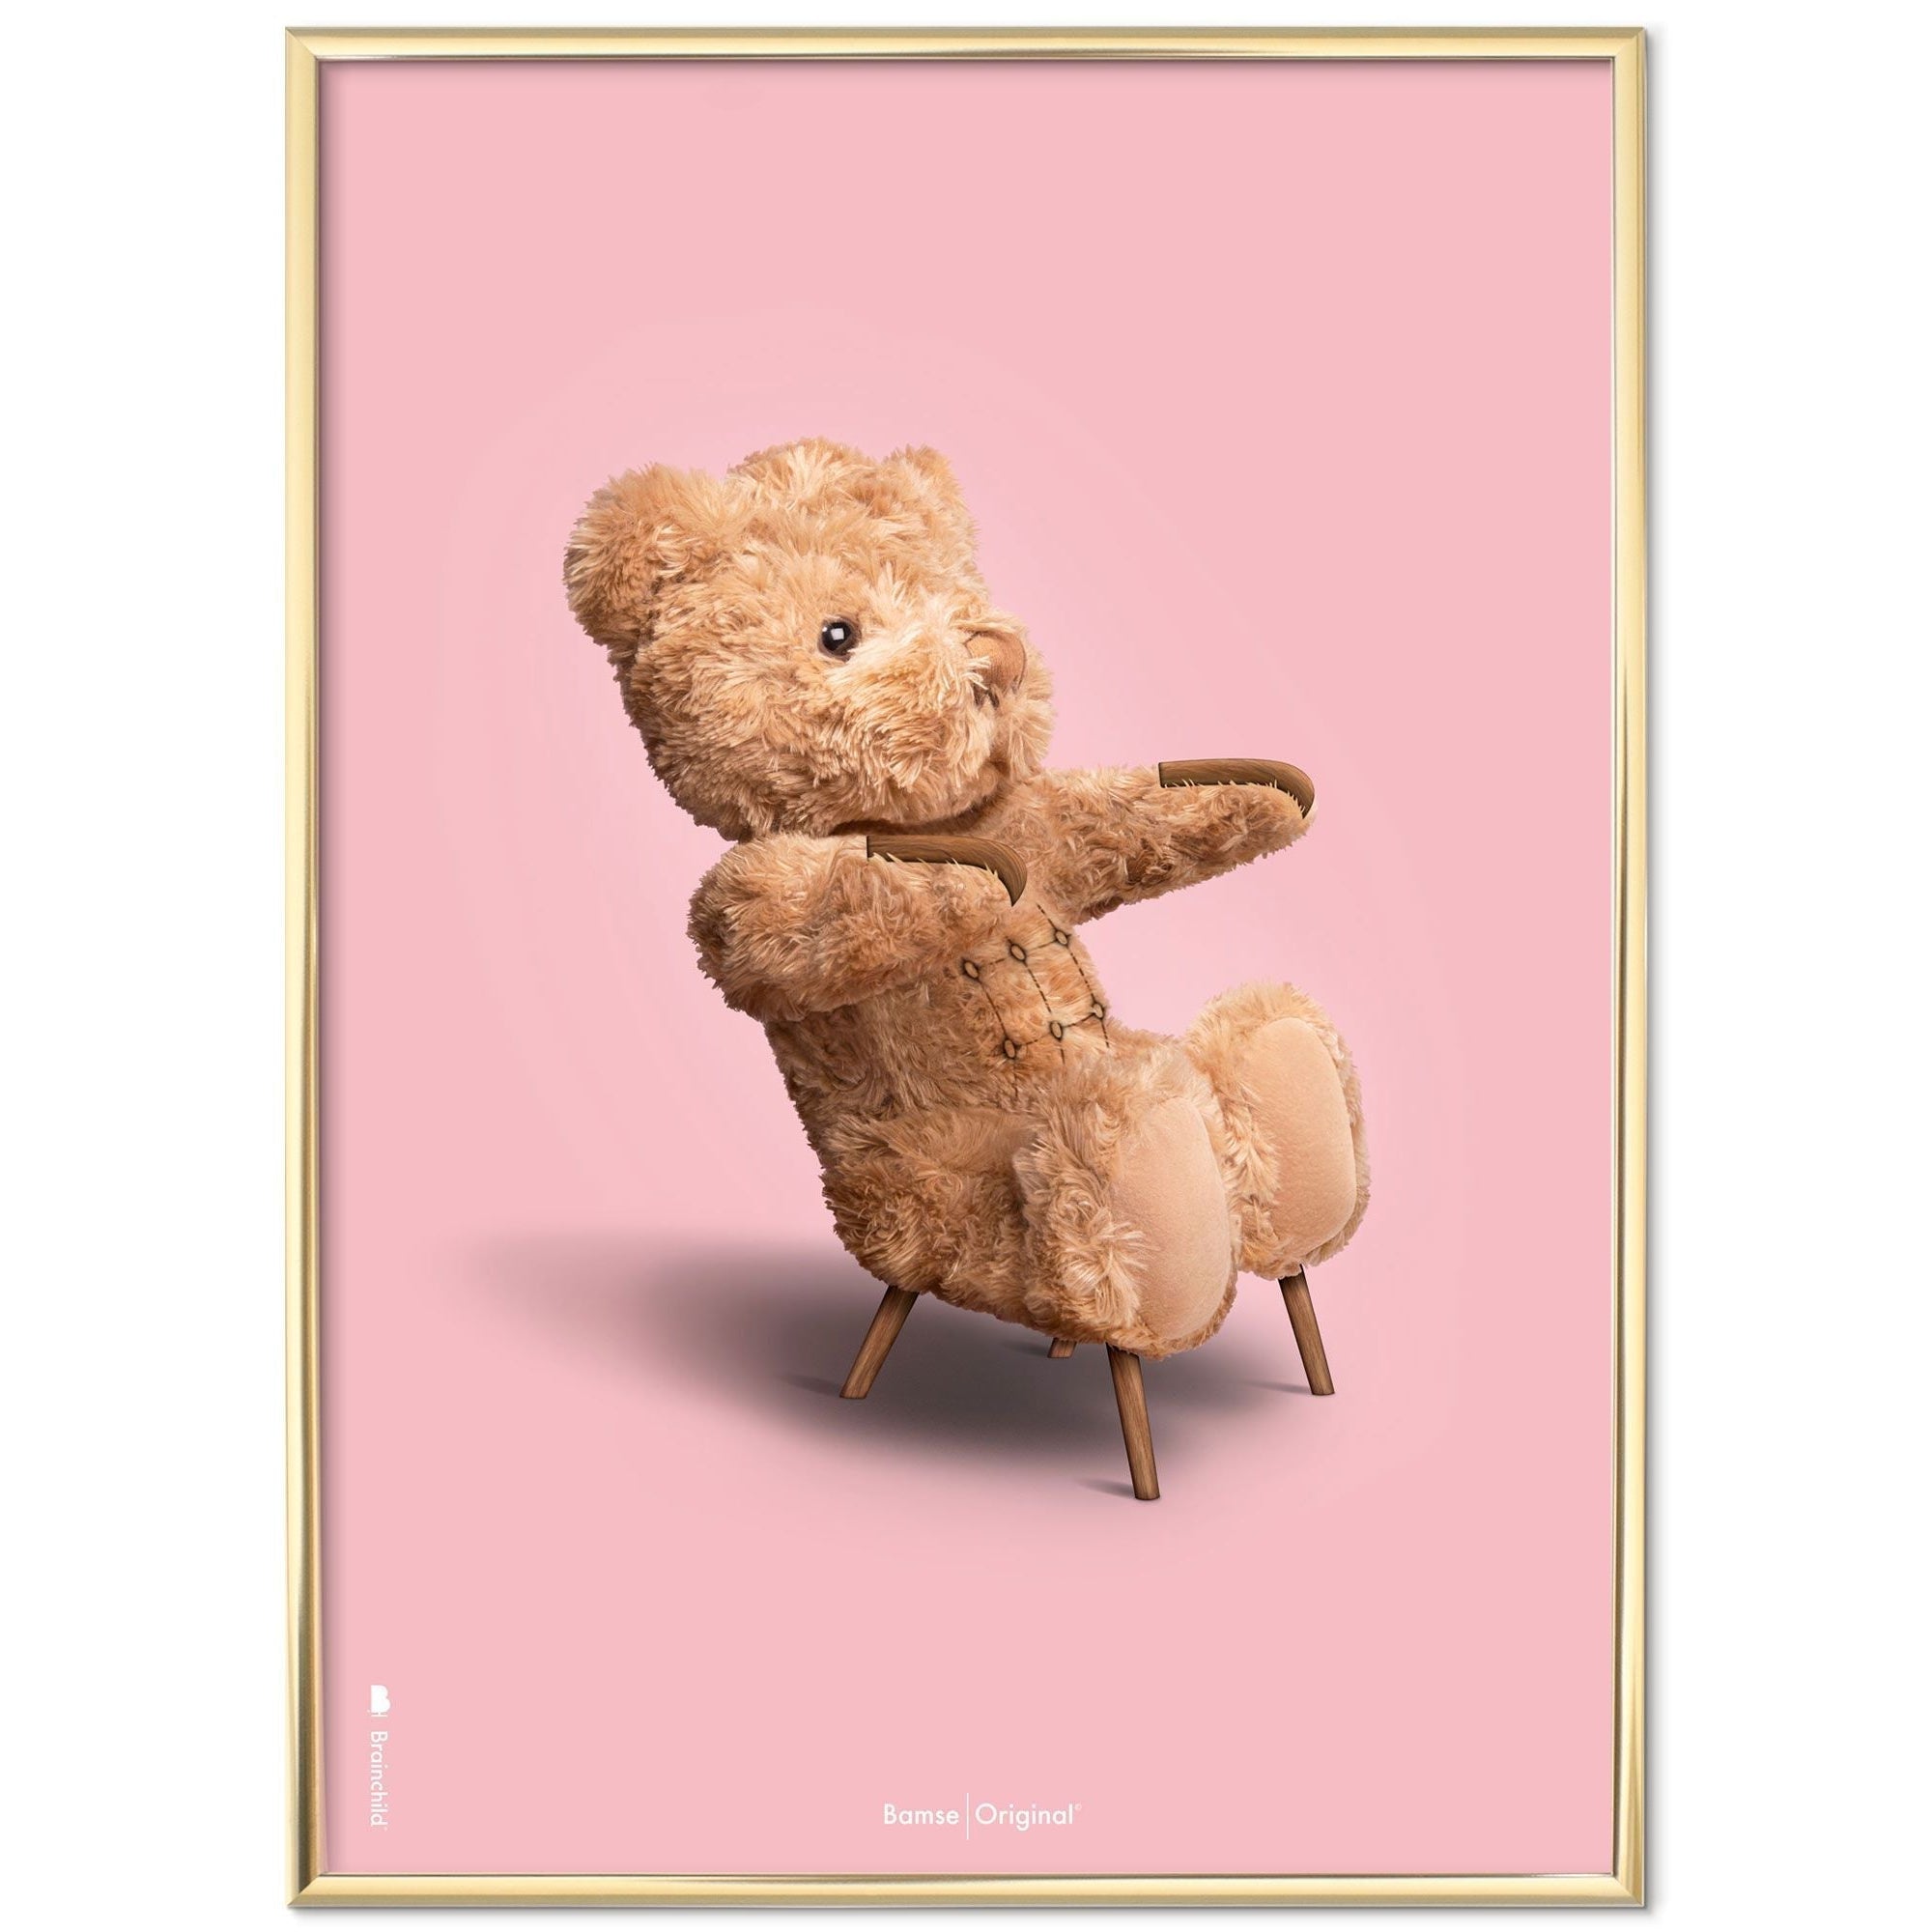 Brainchild Teddybär Classic Poster Messingfarbener Rahmen 30x40 Cm, Rosa Hintergrund